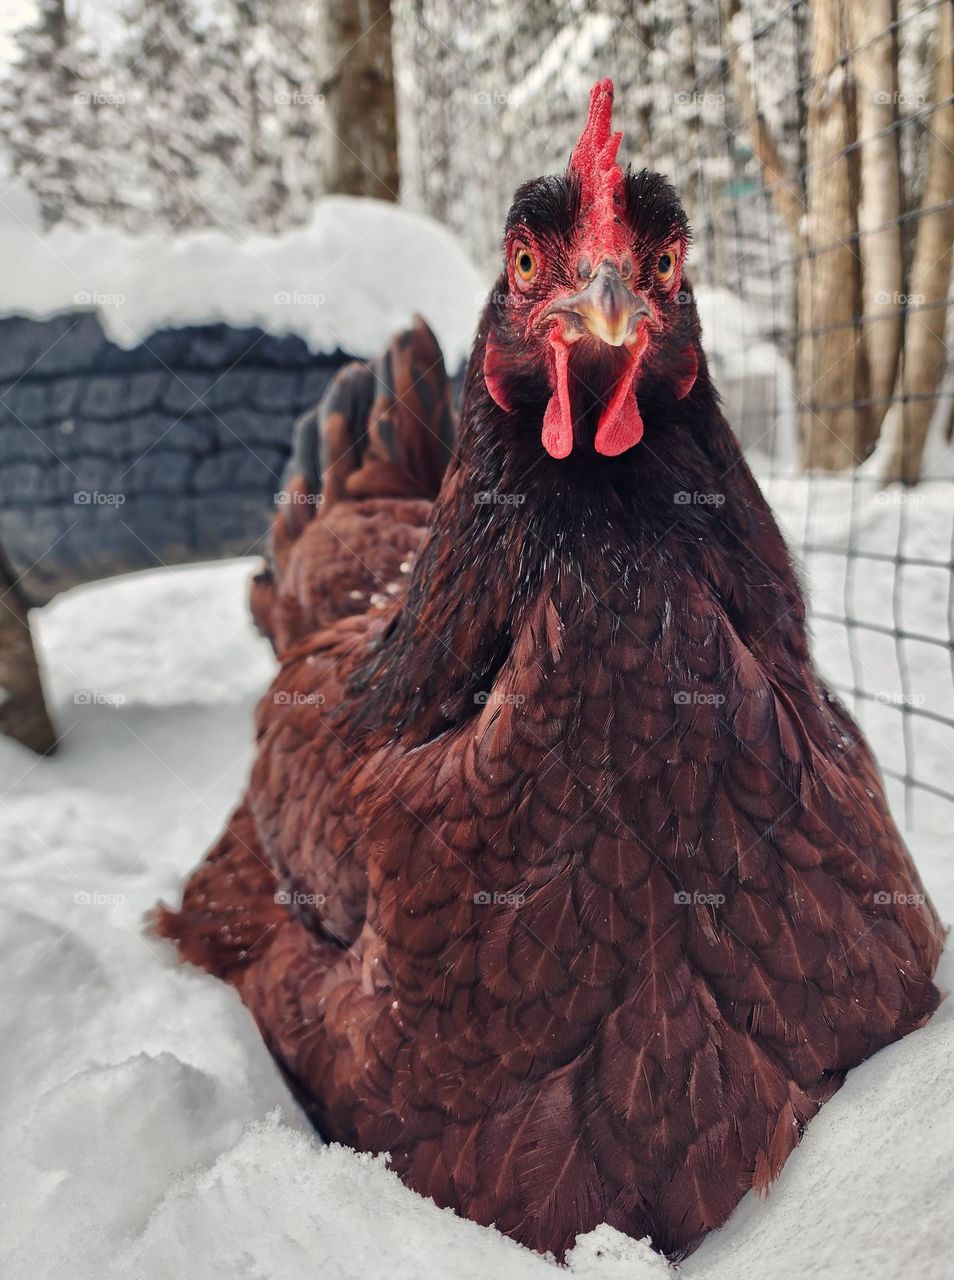 Chicken stuck in the snow.